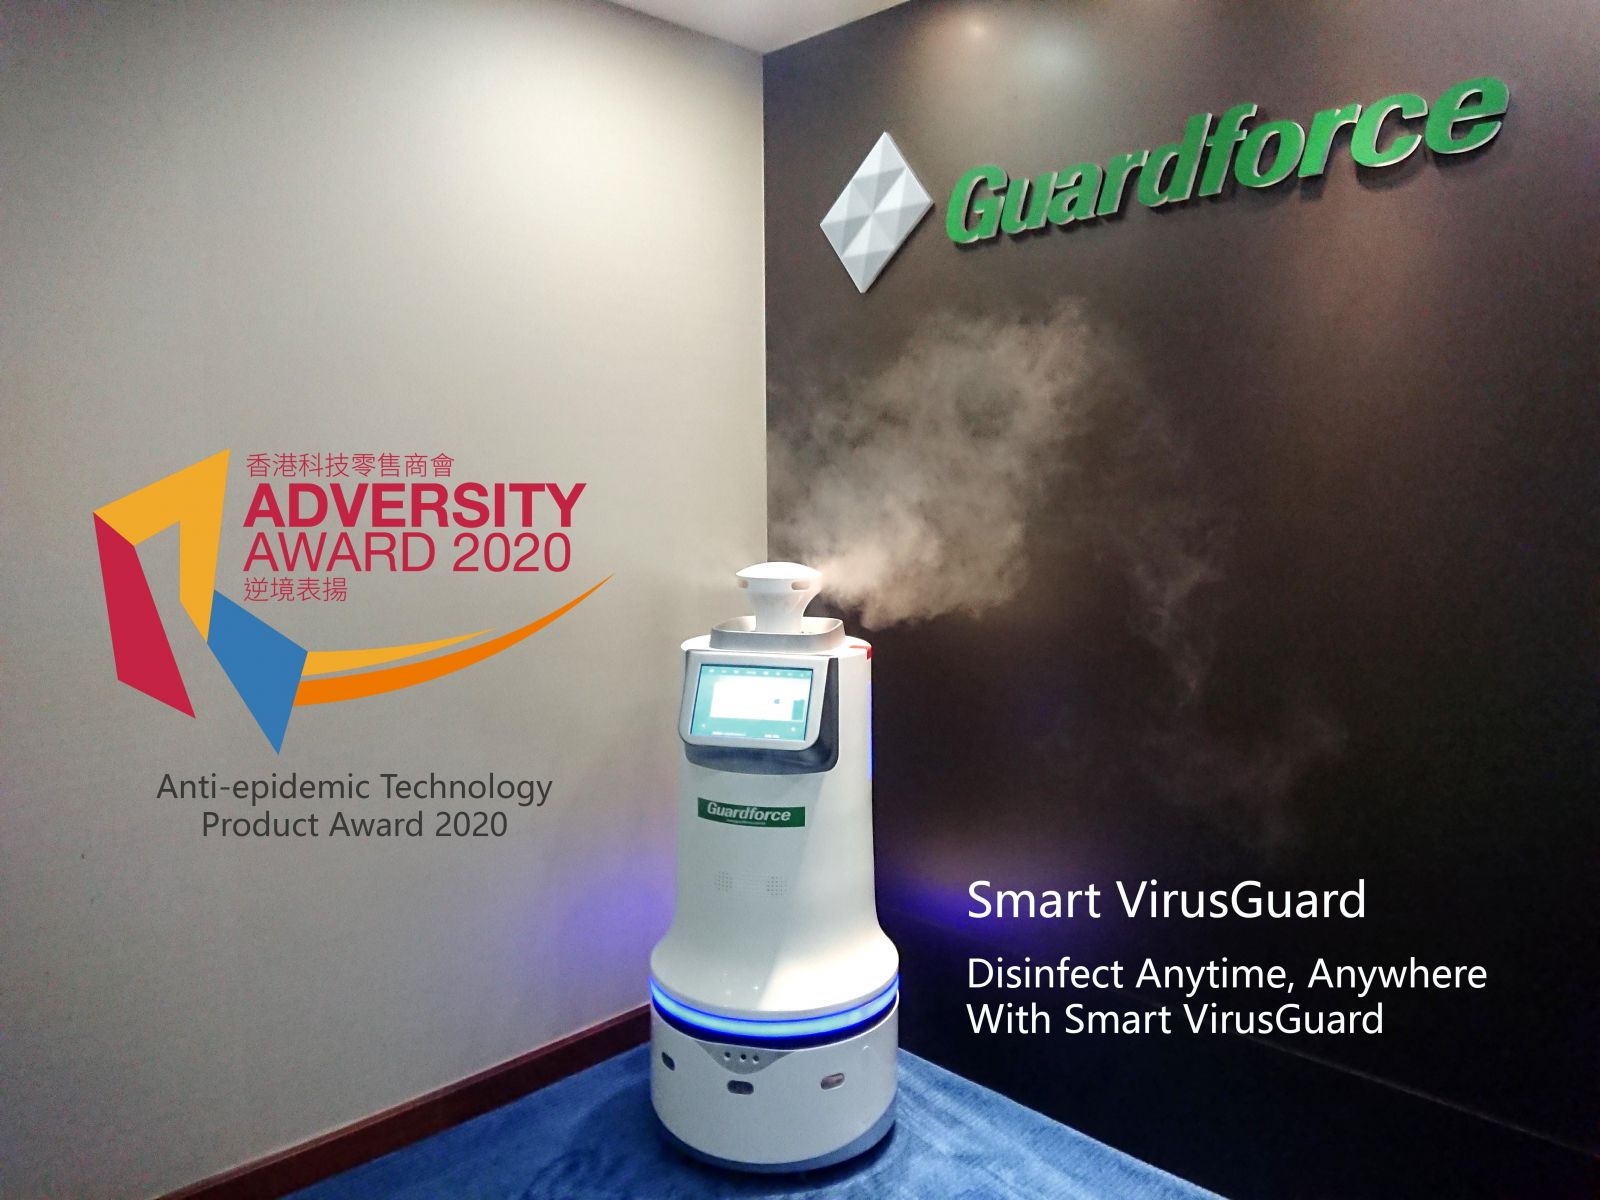 VirusGuard received anti-epidemic technology product award 2020 of Adversity awards - Guardforce